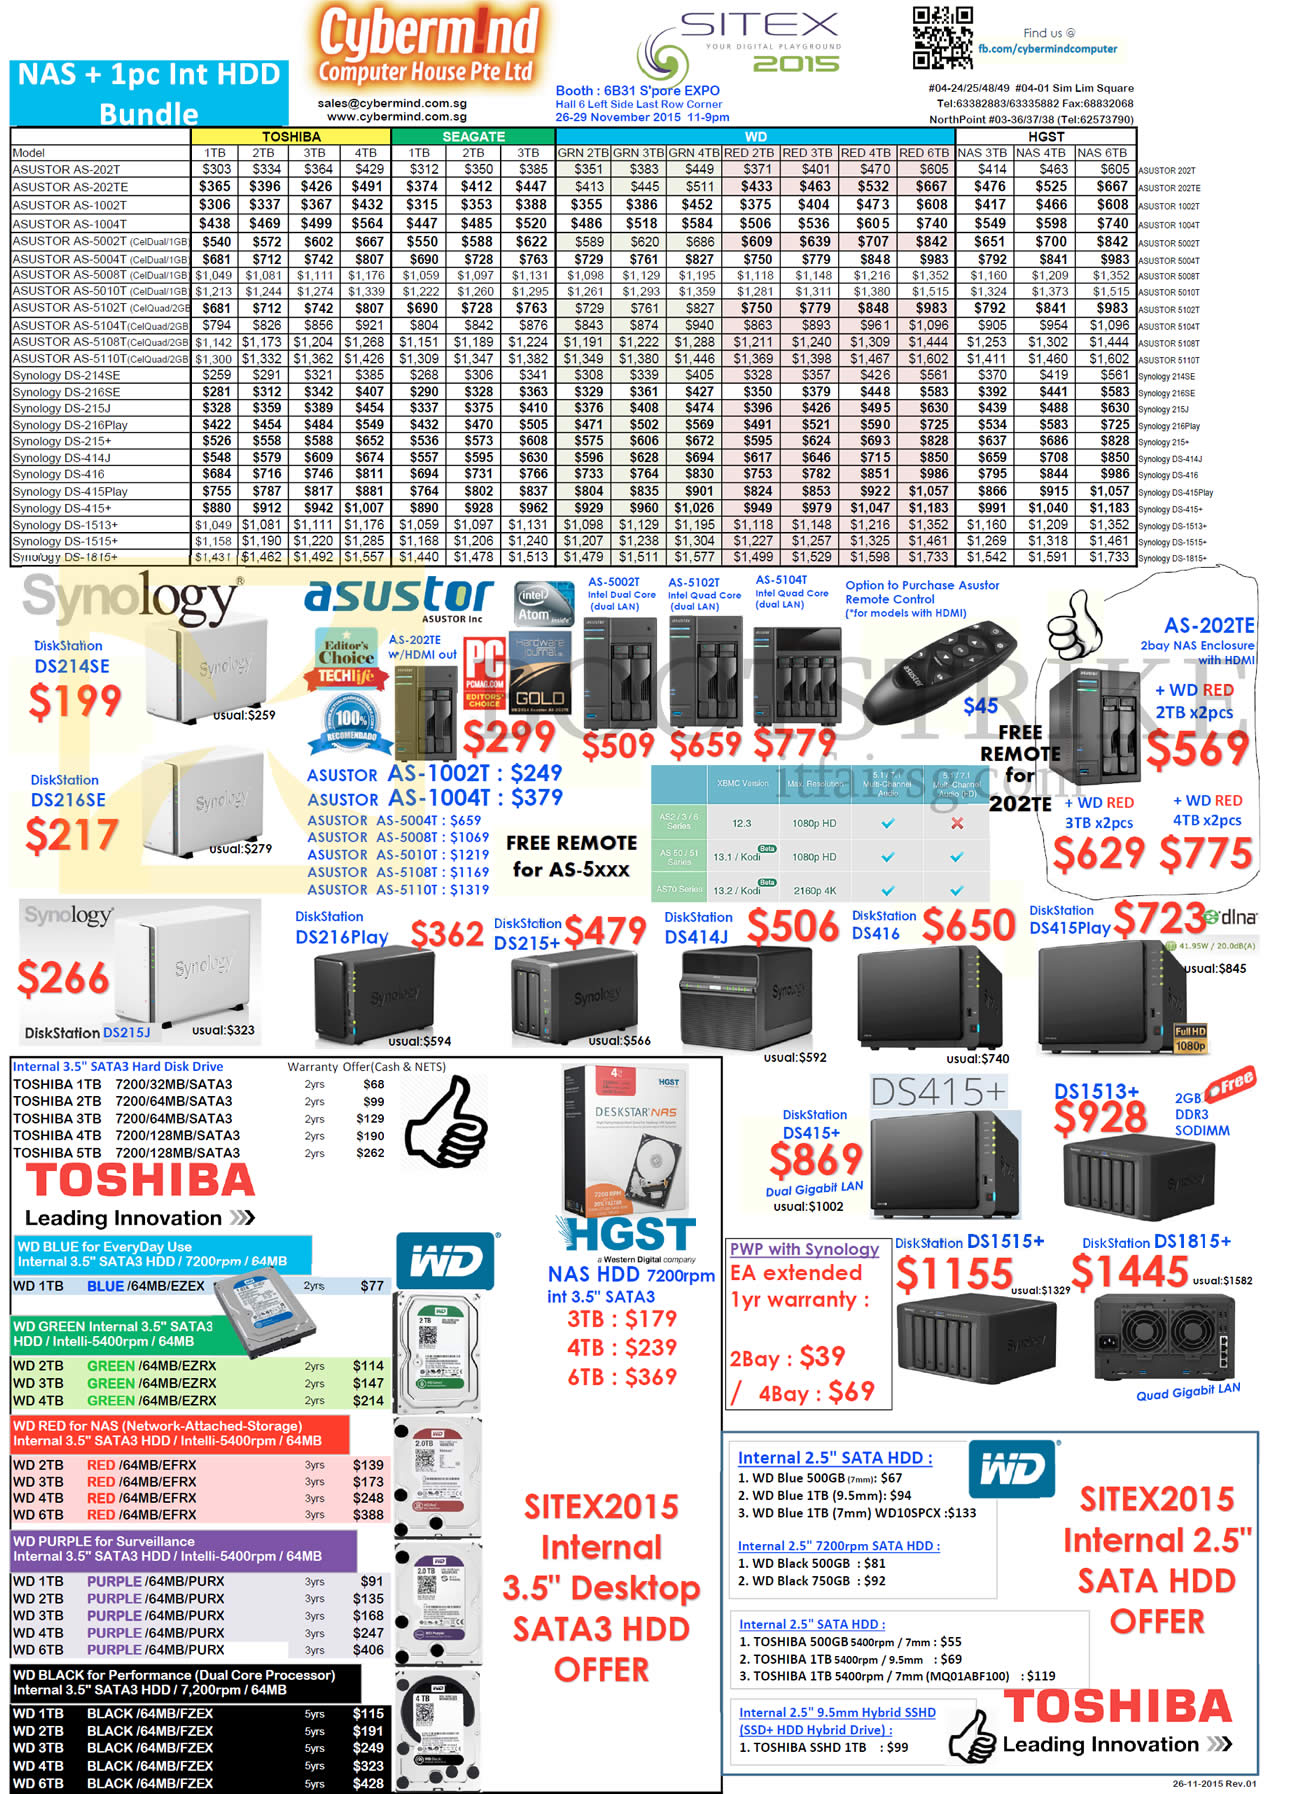 SITEX 2015 price list image brochure of Cybermind NAS Bundles, Synology, Asustor, Toshiba Hard Disk Drives